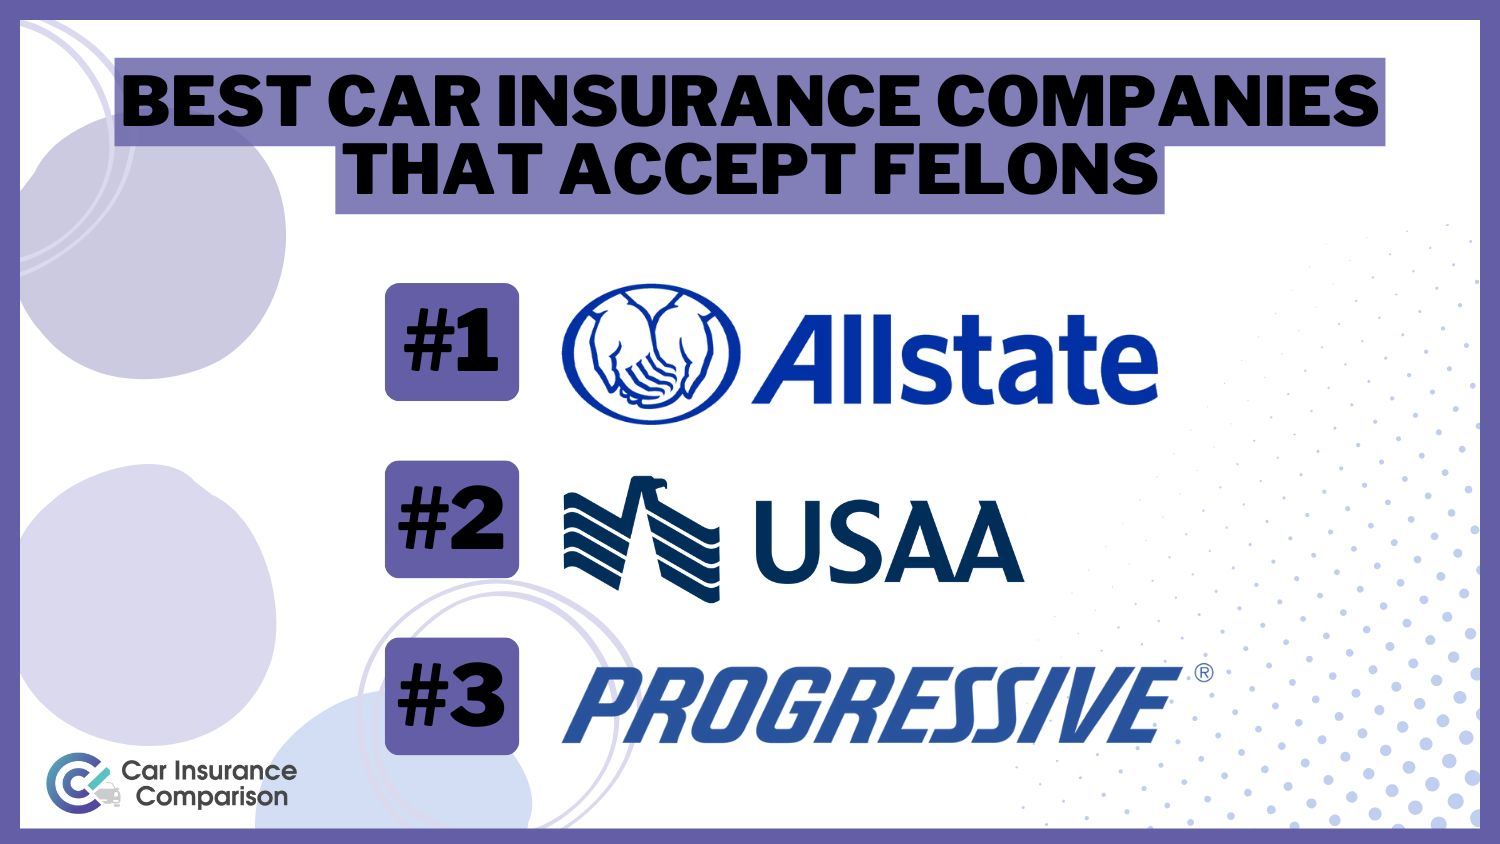 Allstate, USAA, Progressive: Best Car Insurance Companies That Accept Felons